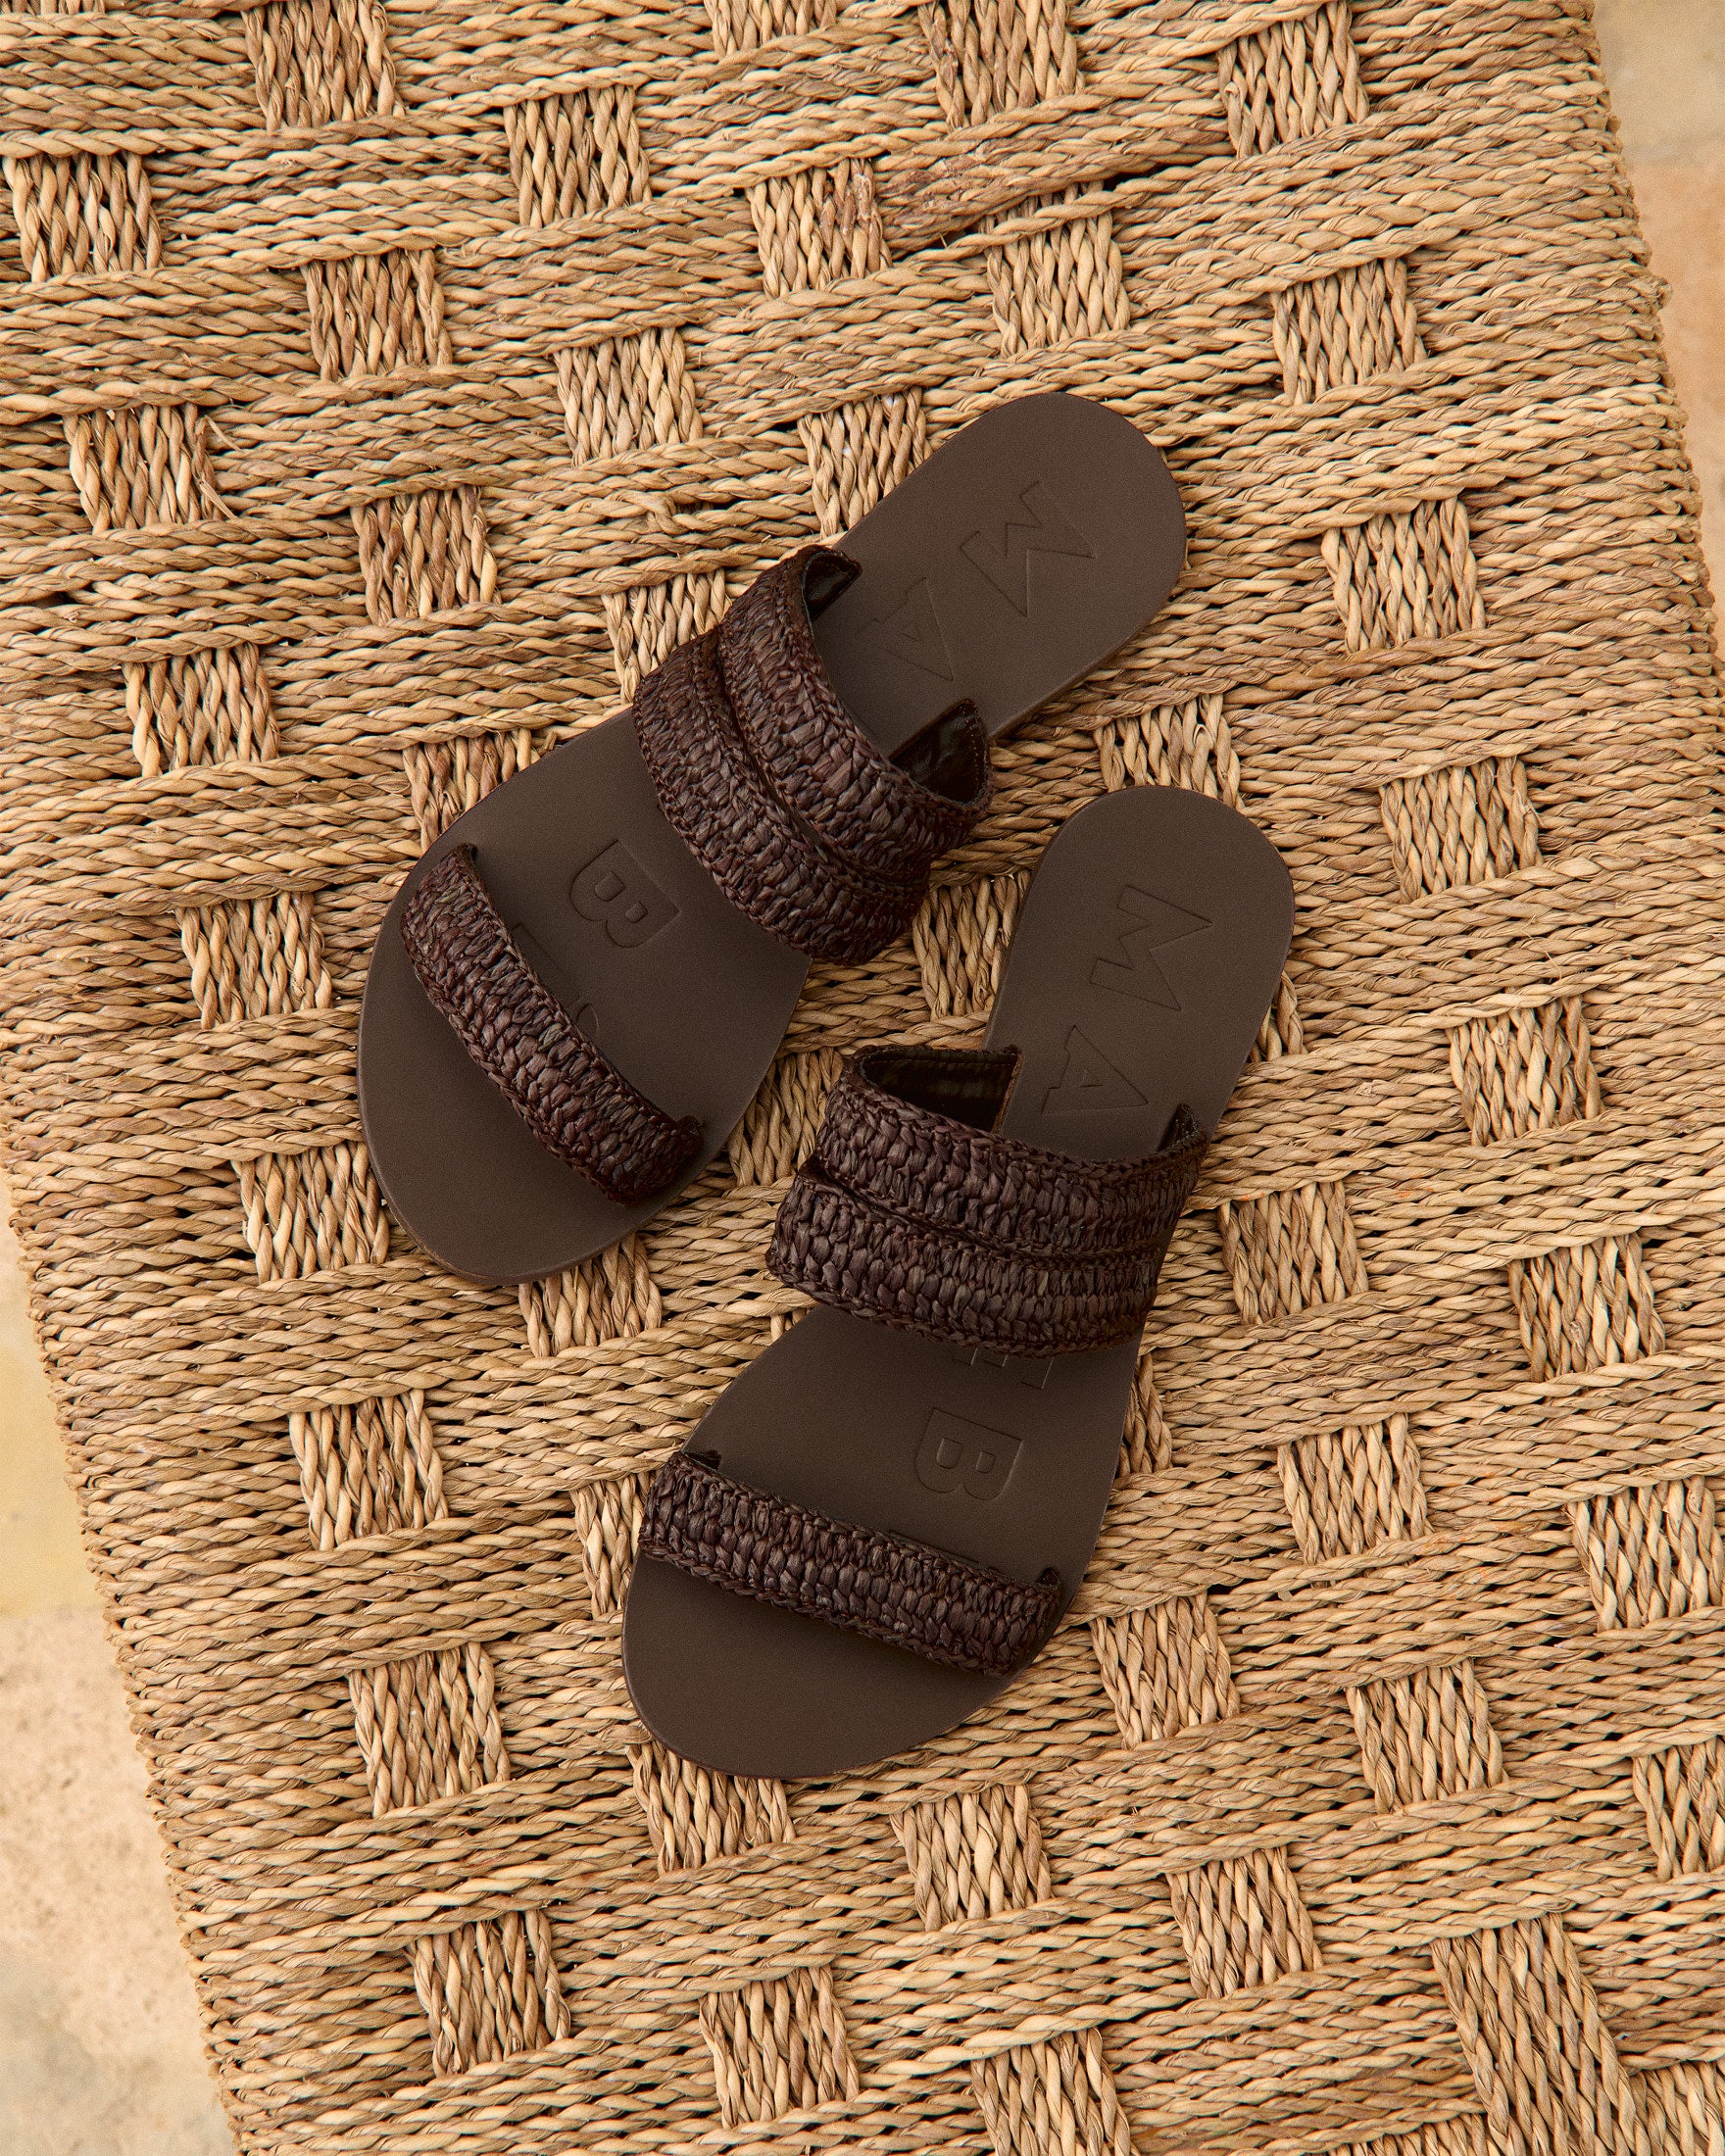 Raffia Stripes Leather|Three Bands Sandals - Cocoa